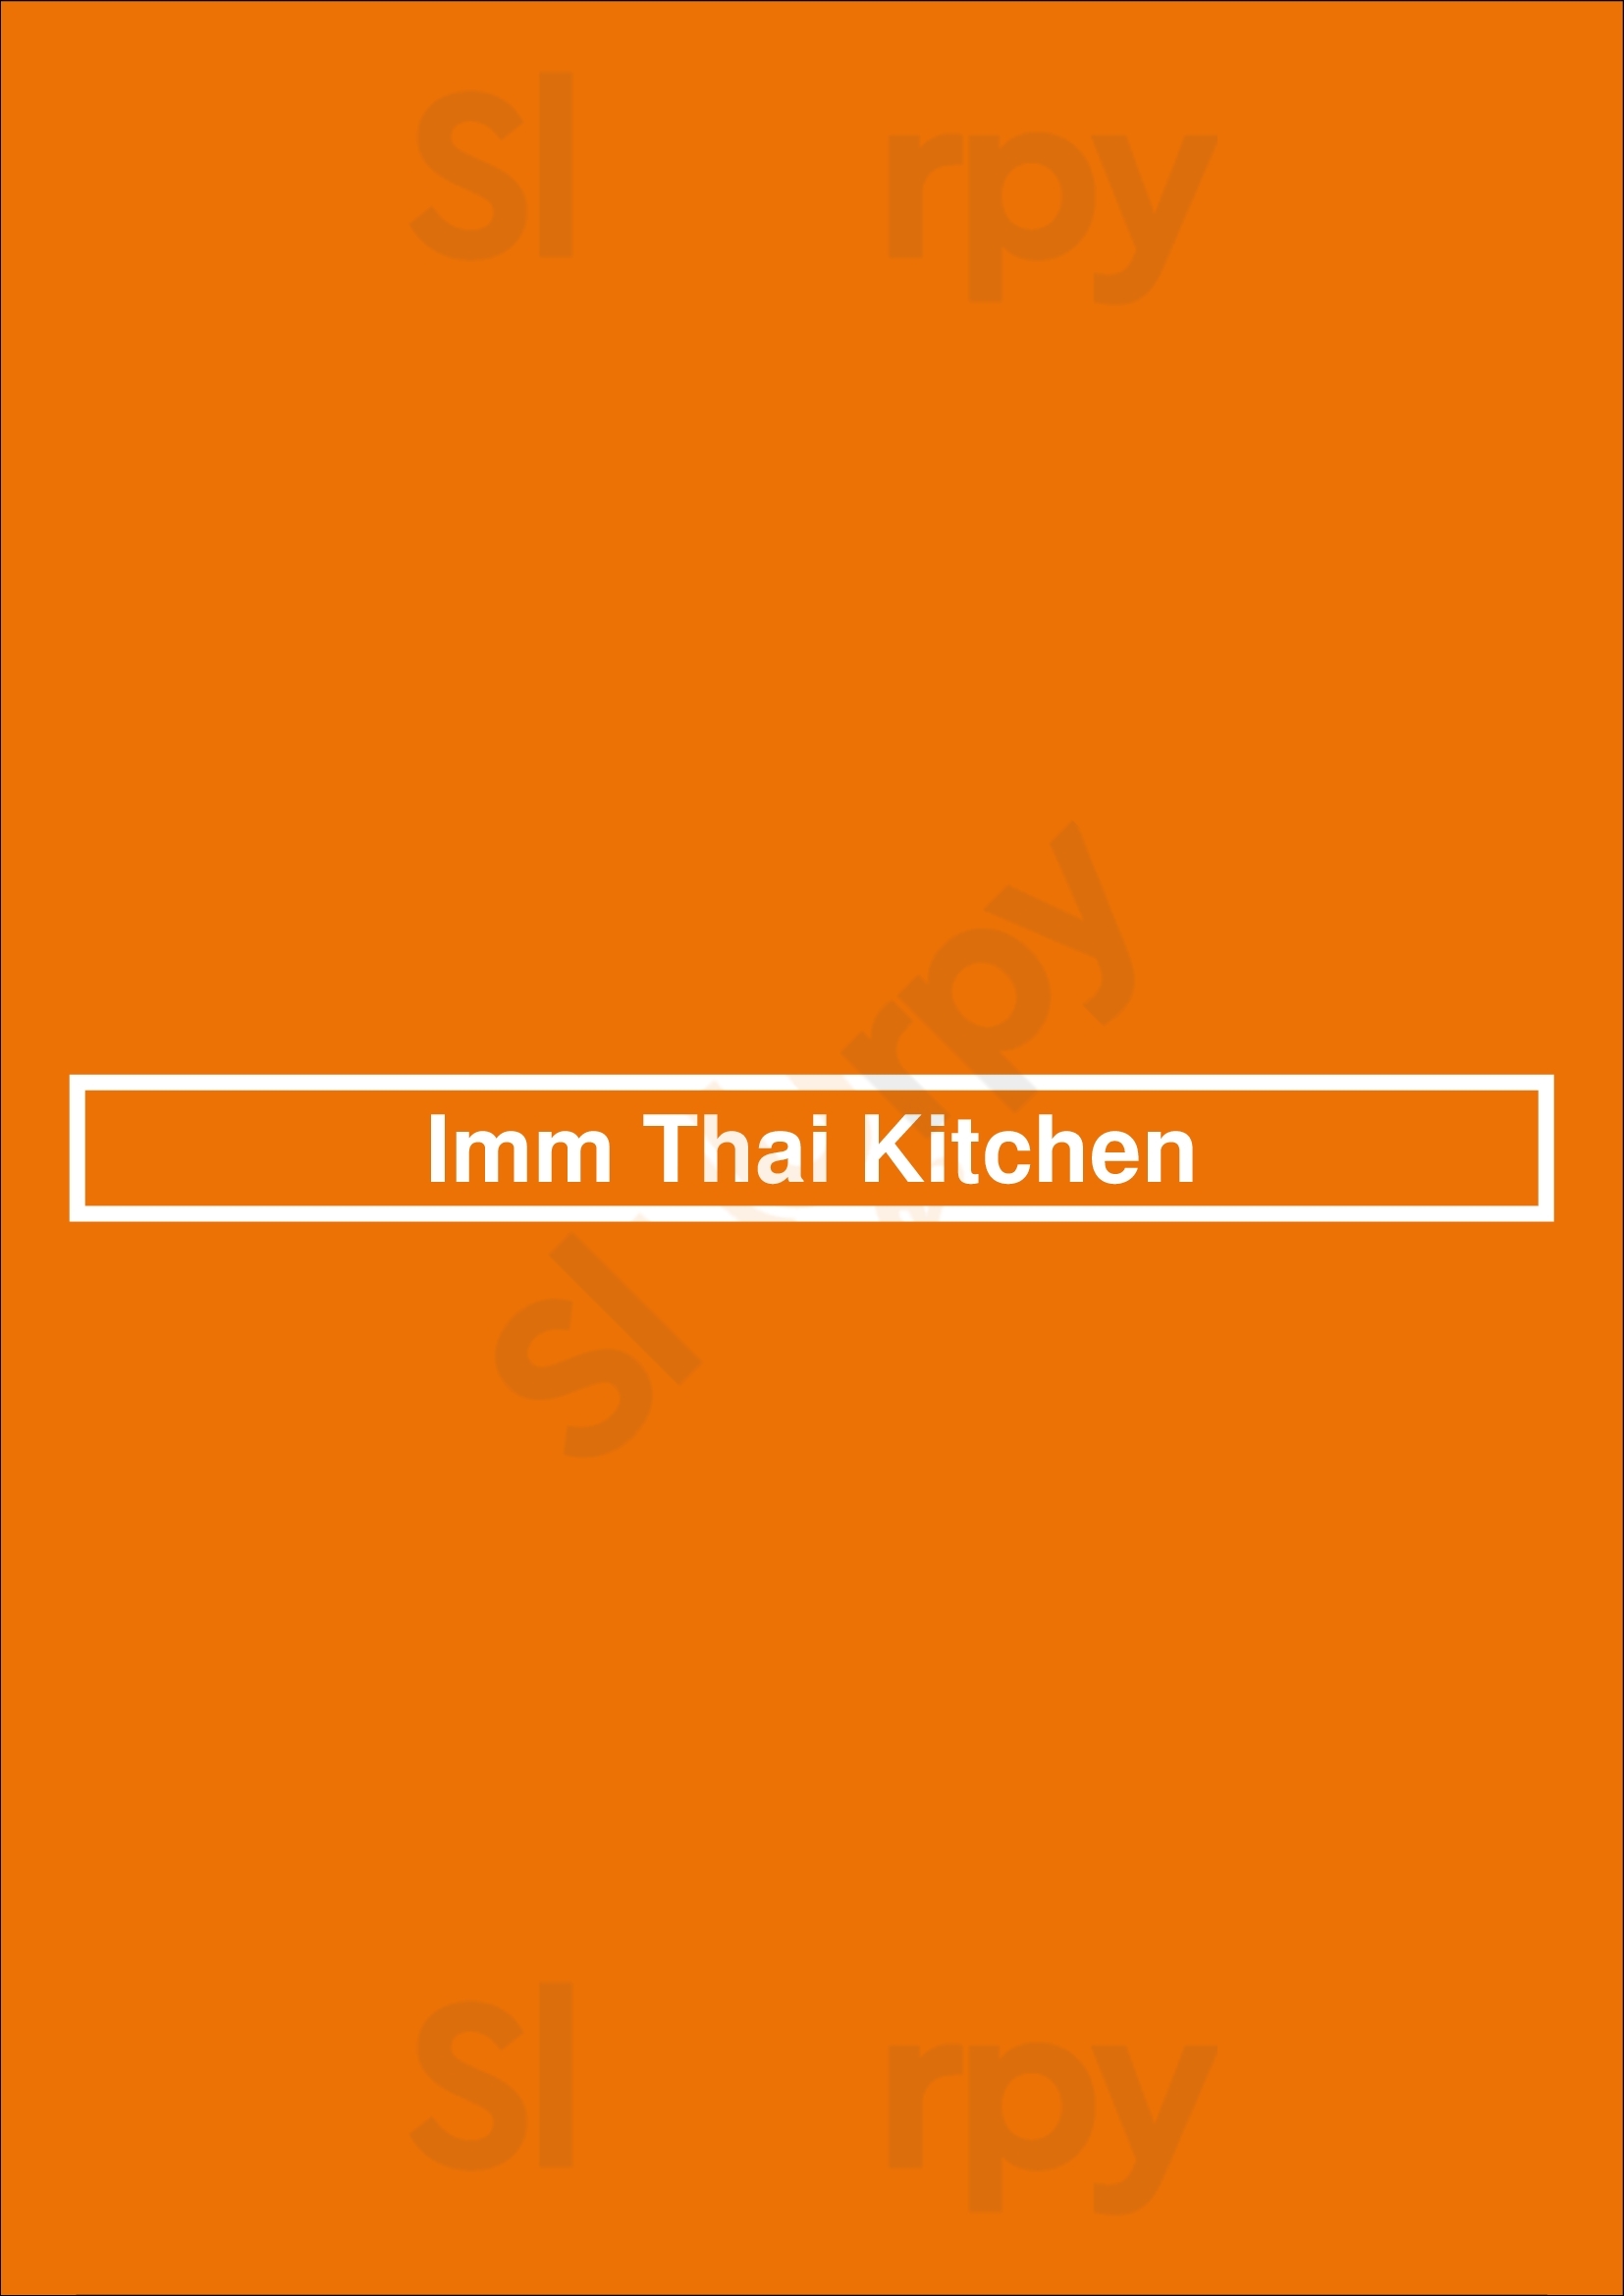 Imm Thai Kitchen Toronto Menu - 1